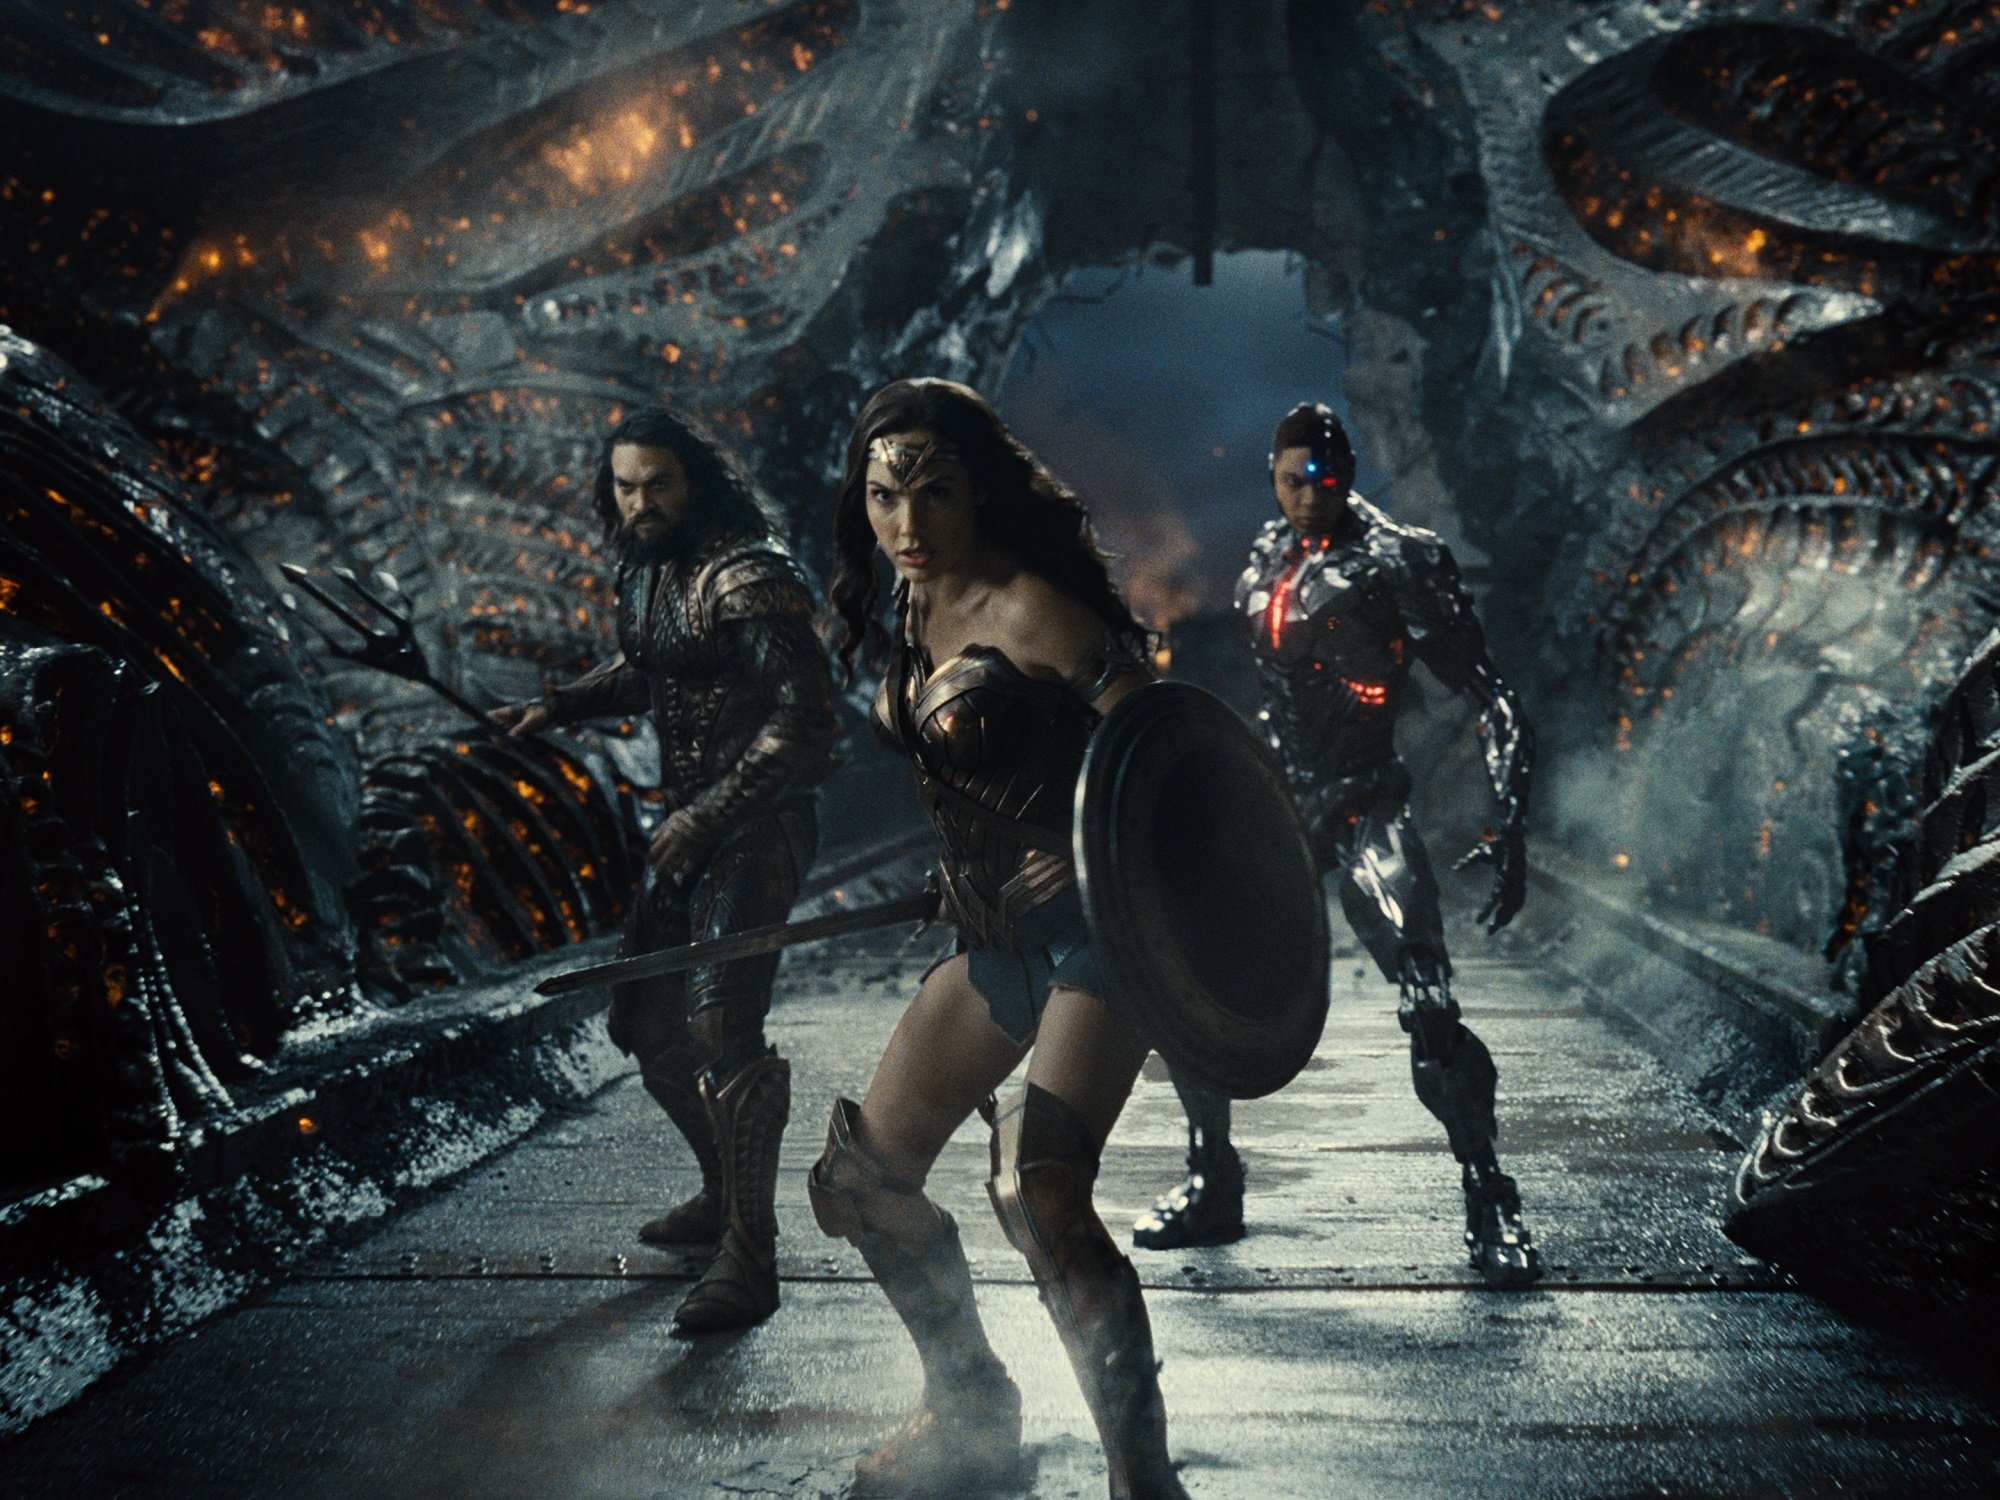 Justice League members Aquaman, Wonder Woman and Cyborg prepare for battle